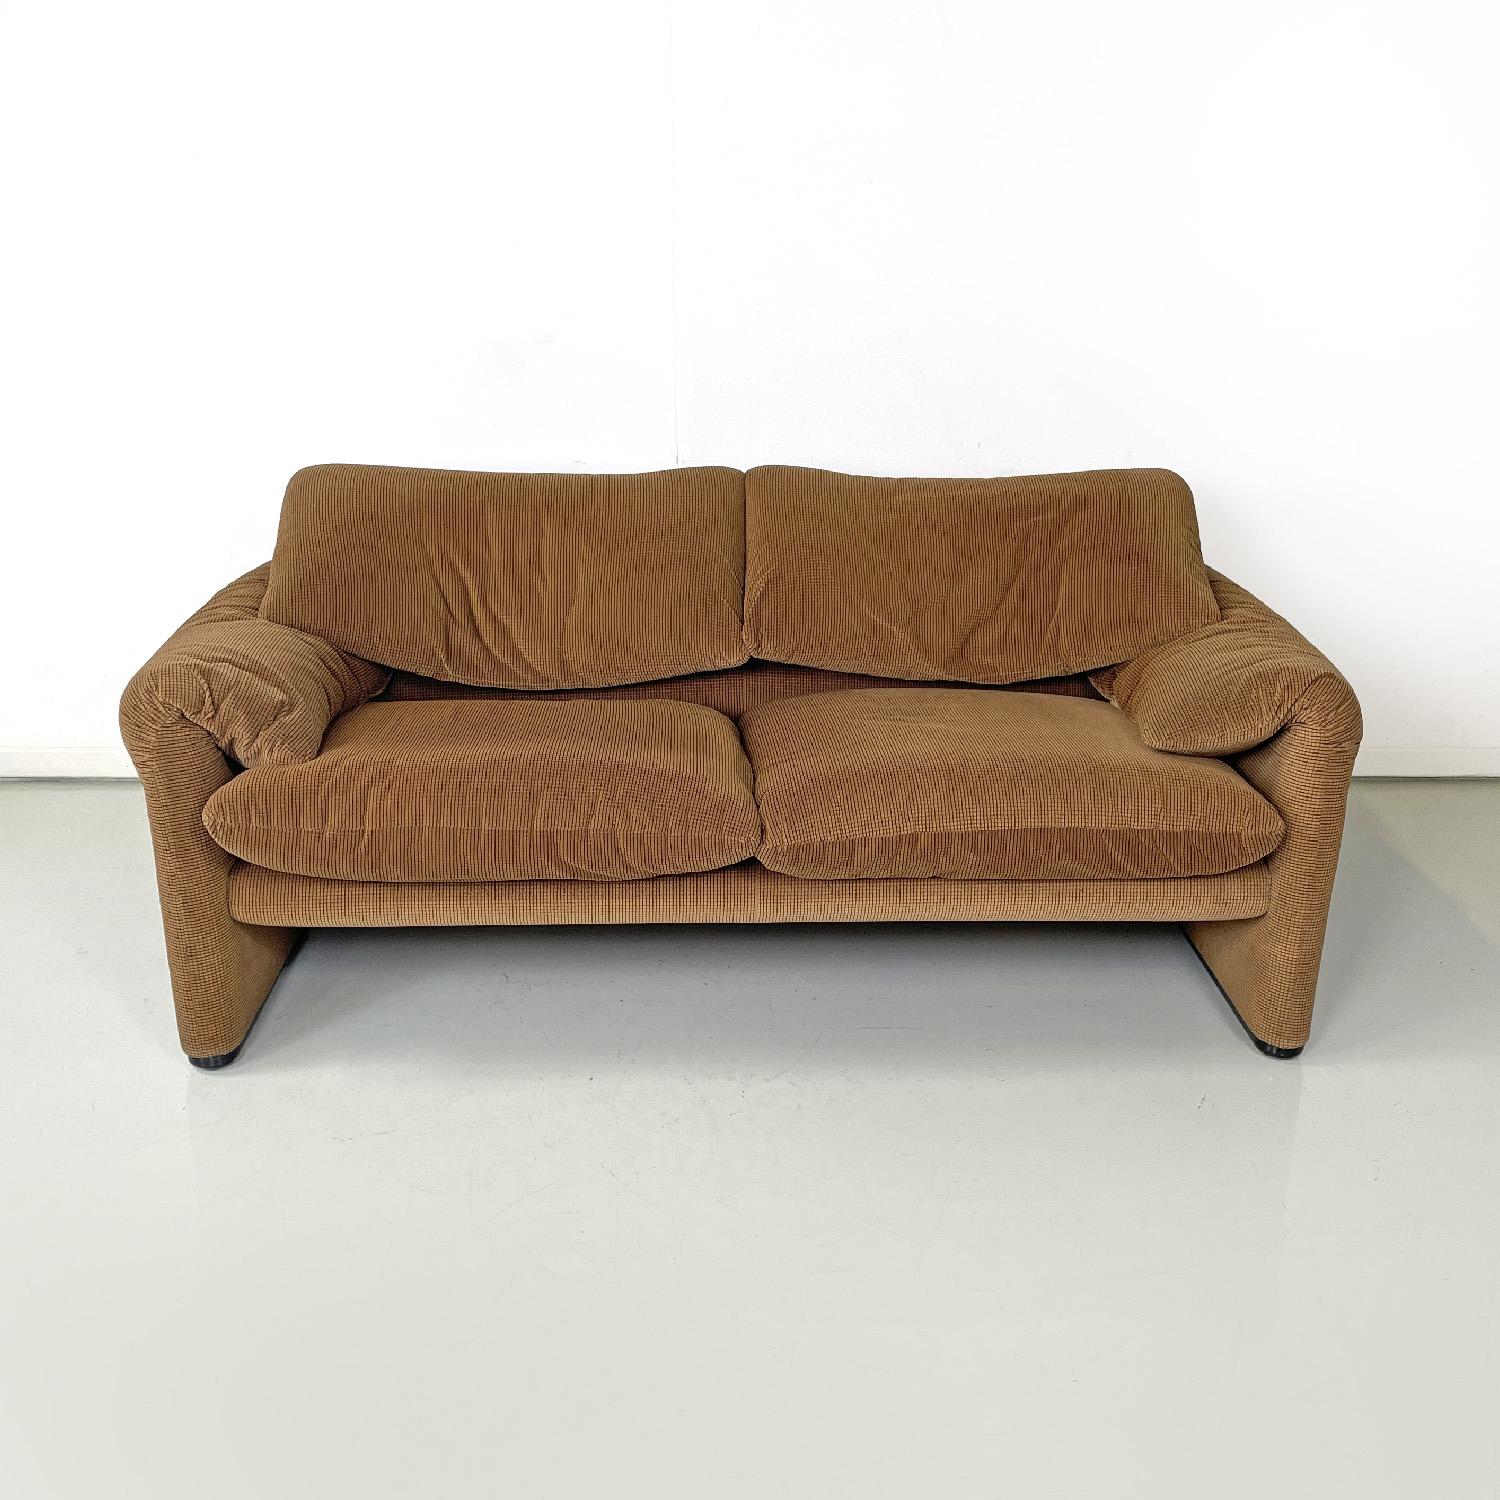 Late 20th Century Italian modern brown sofas Maralunga by Vico Magistretti for Cassina, 1973 For Sale